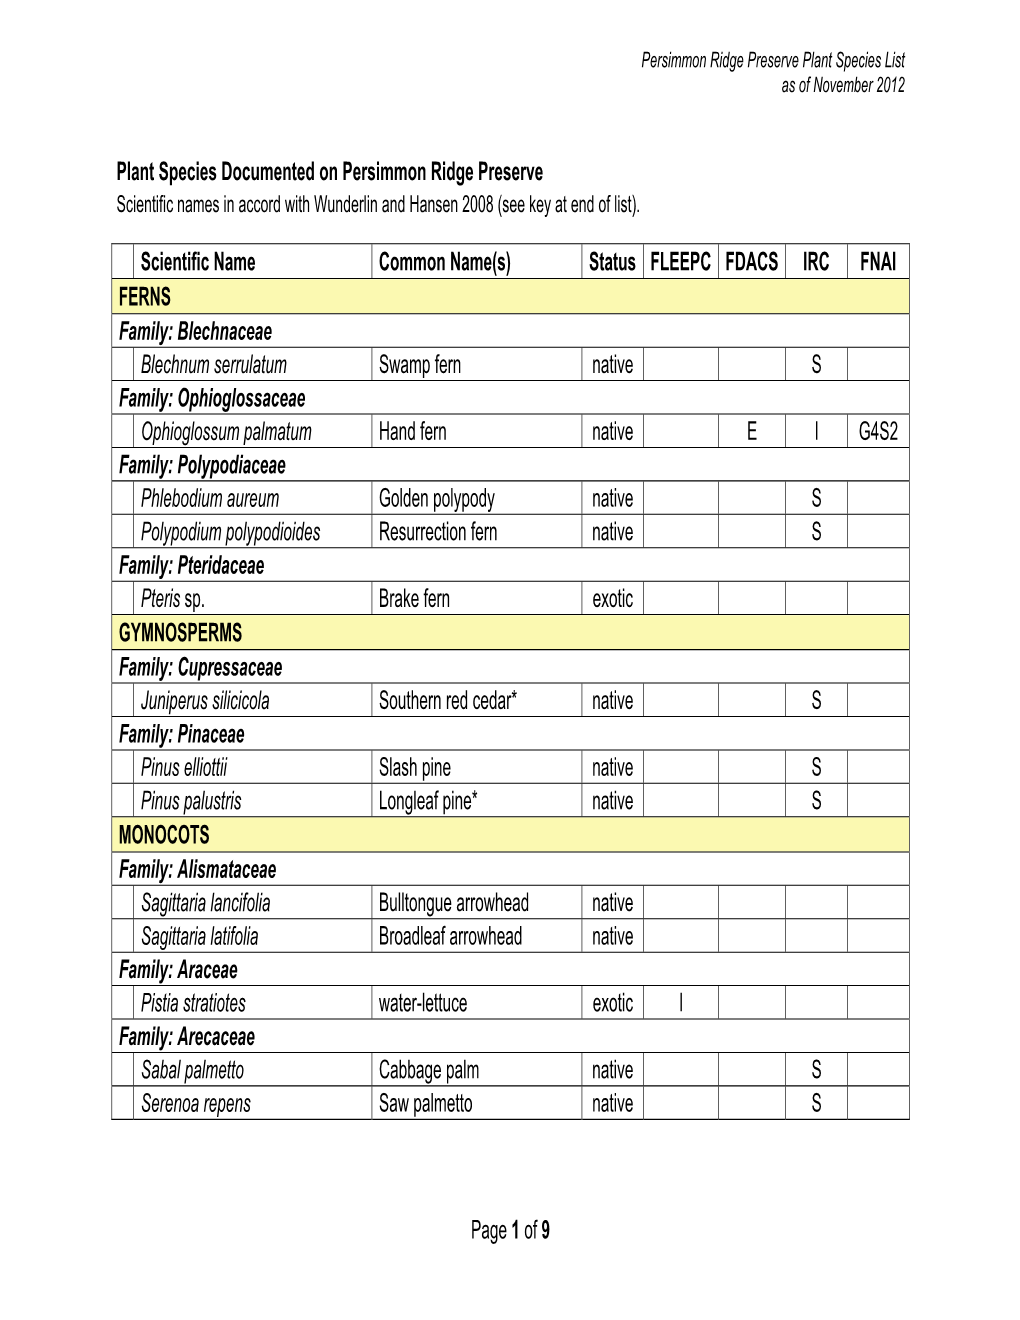 Persimmon Ridge Preserve Plant Species List As of November 2012